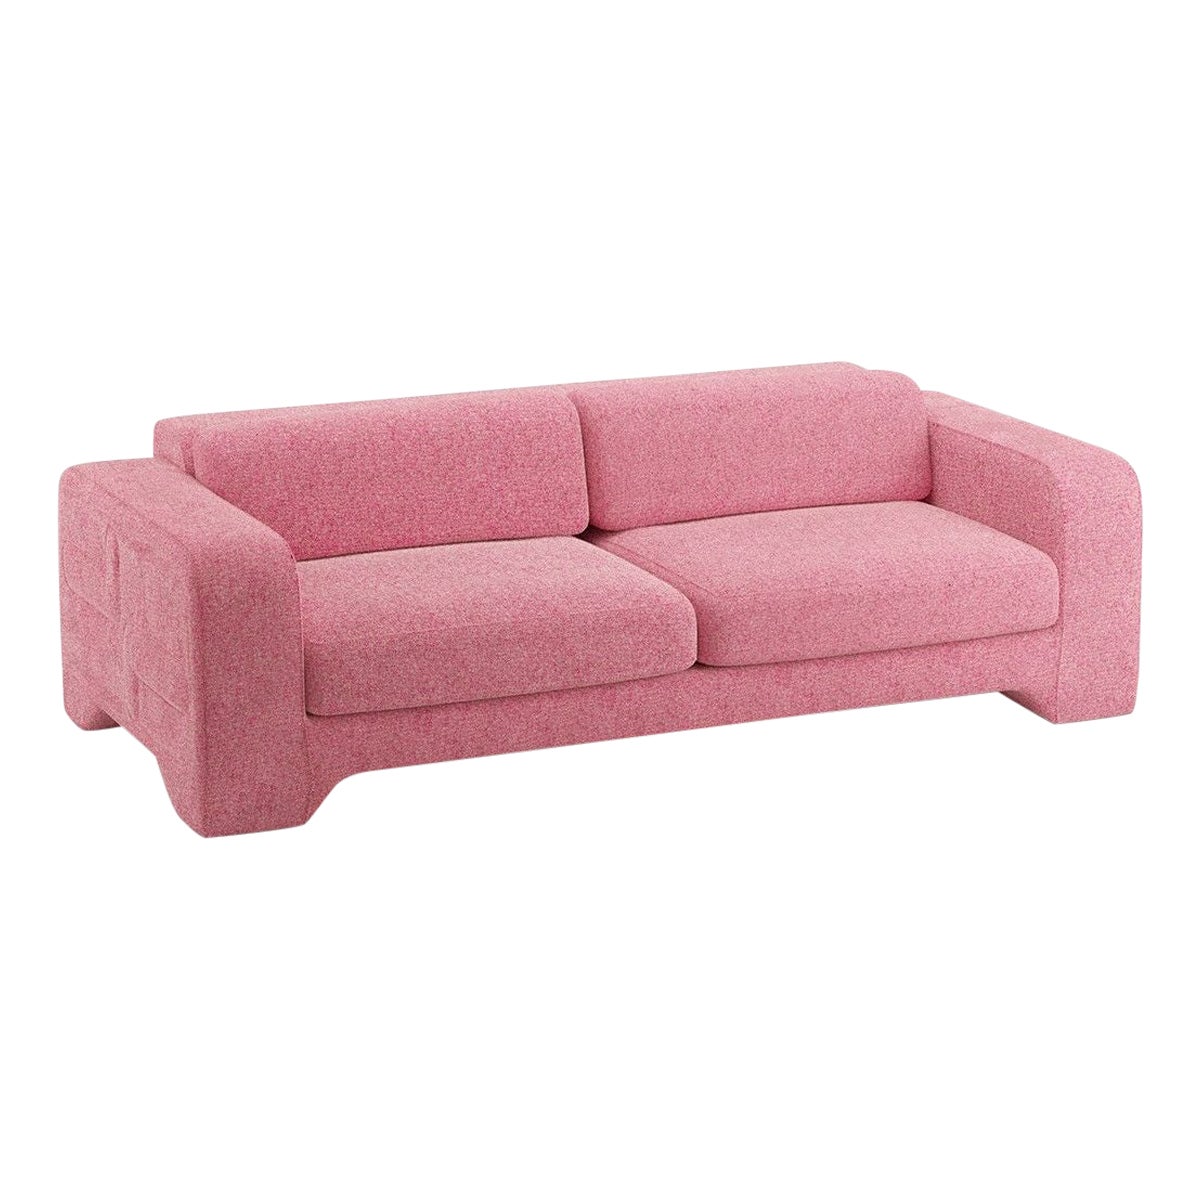 Popus Editions Giovanna 4 Seater Sofa in Fuschia London Linen Fabric